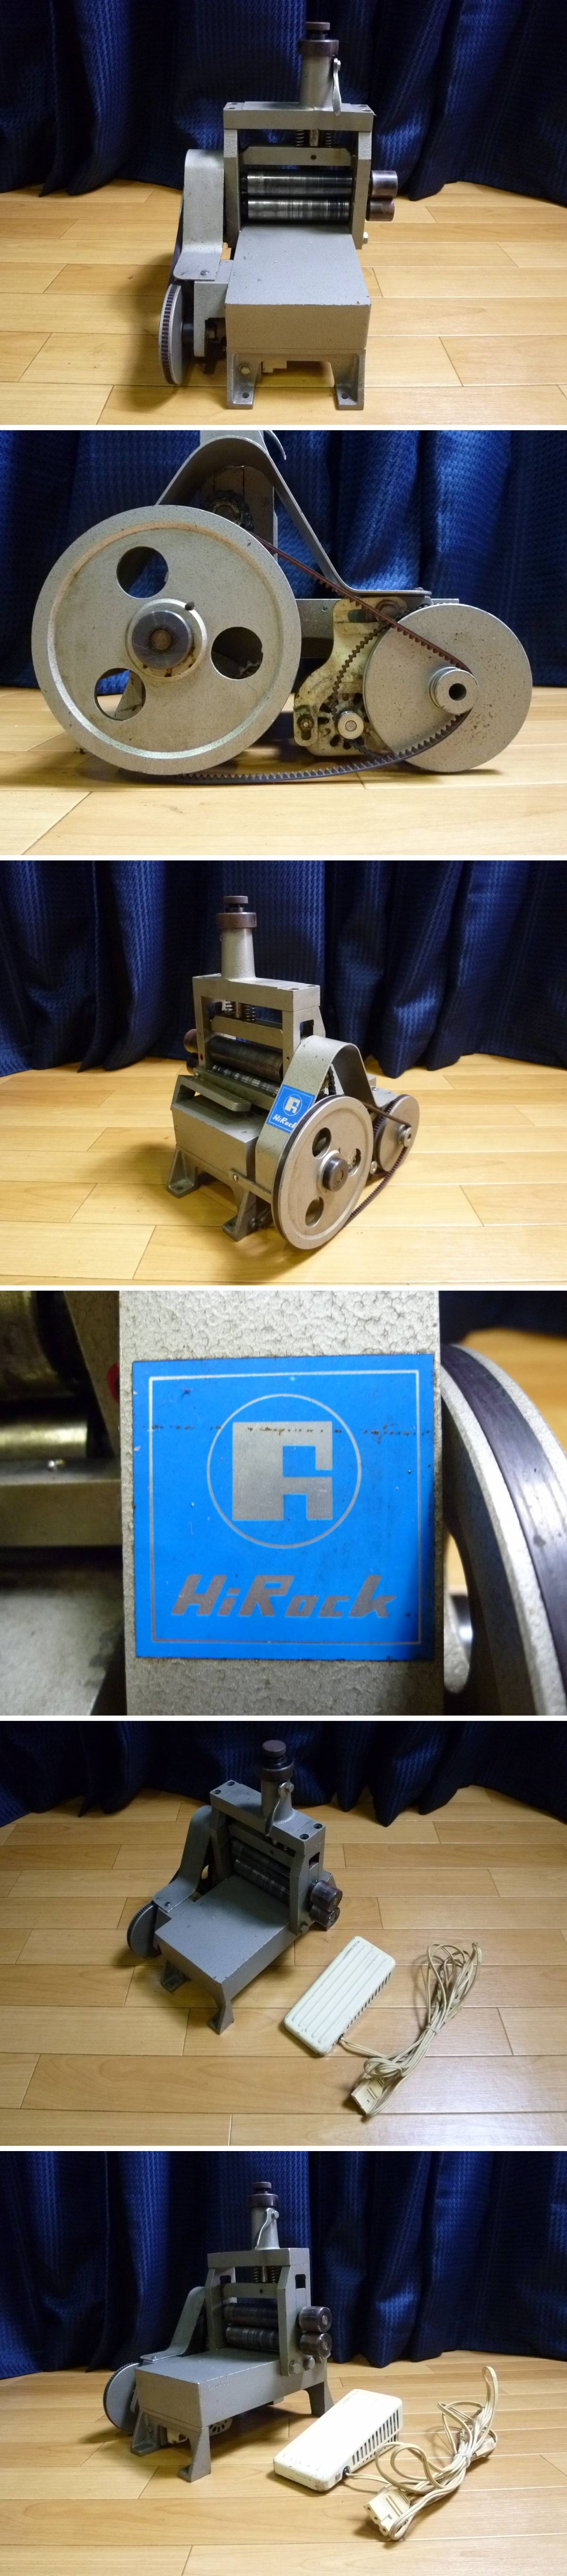 △ HiRock ペダル式 電動 ローラー 圧着機 皮革加工